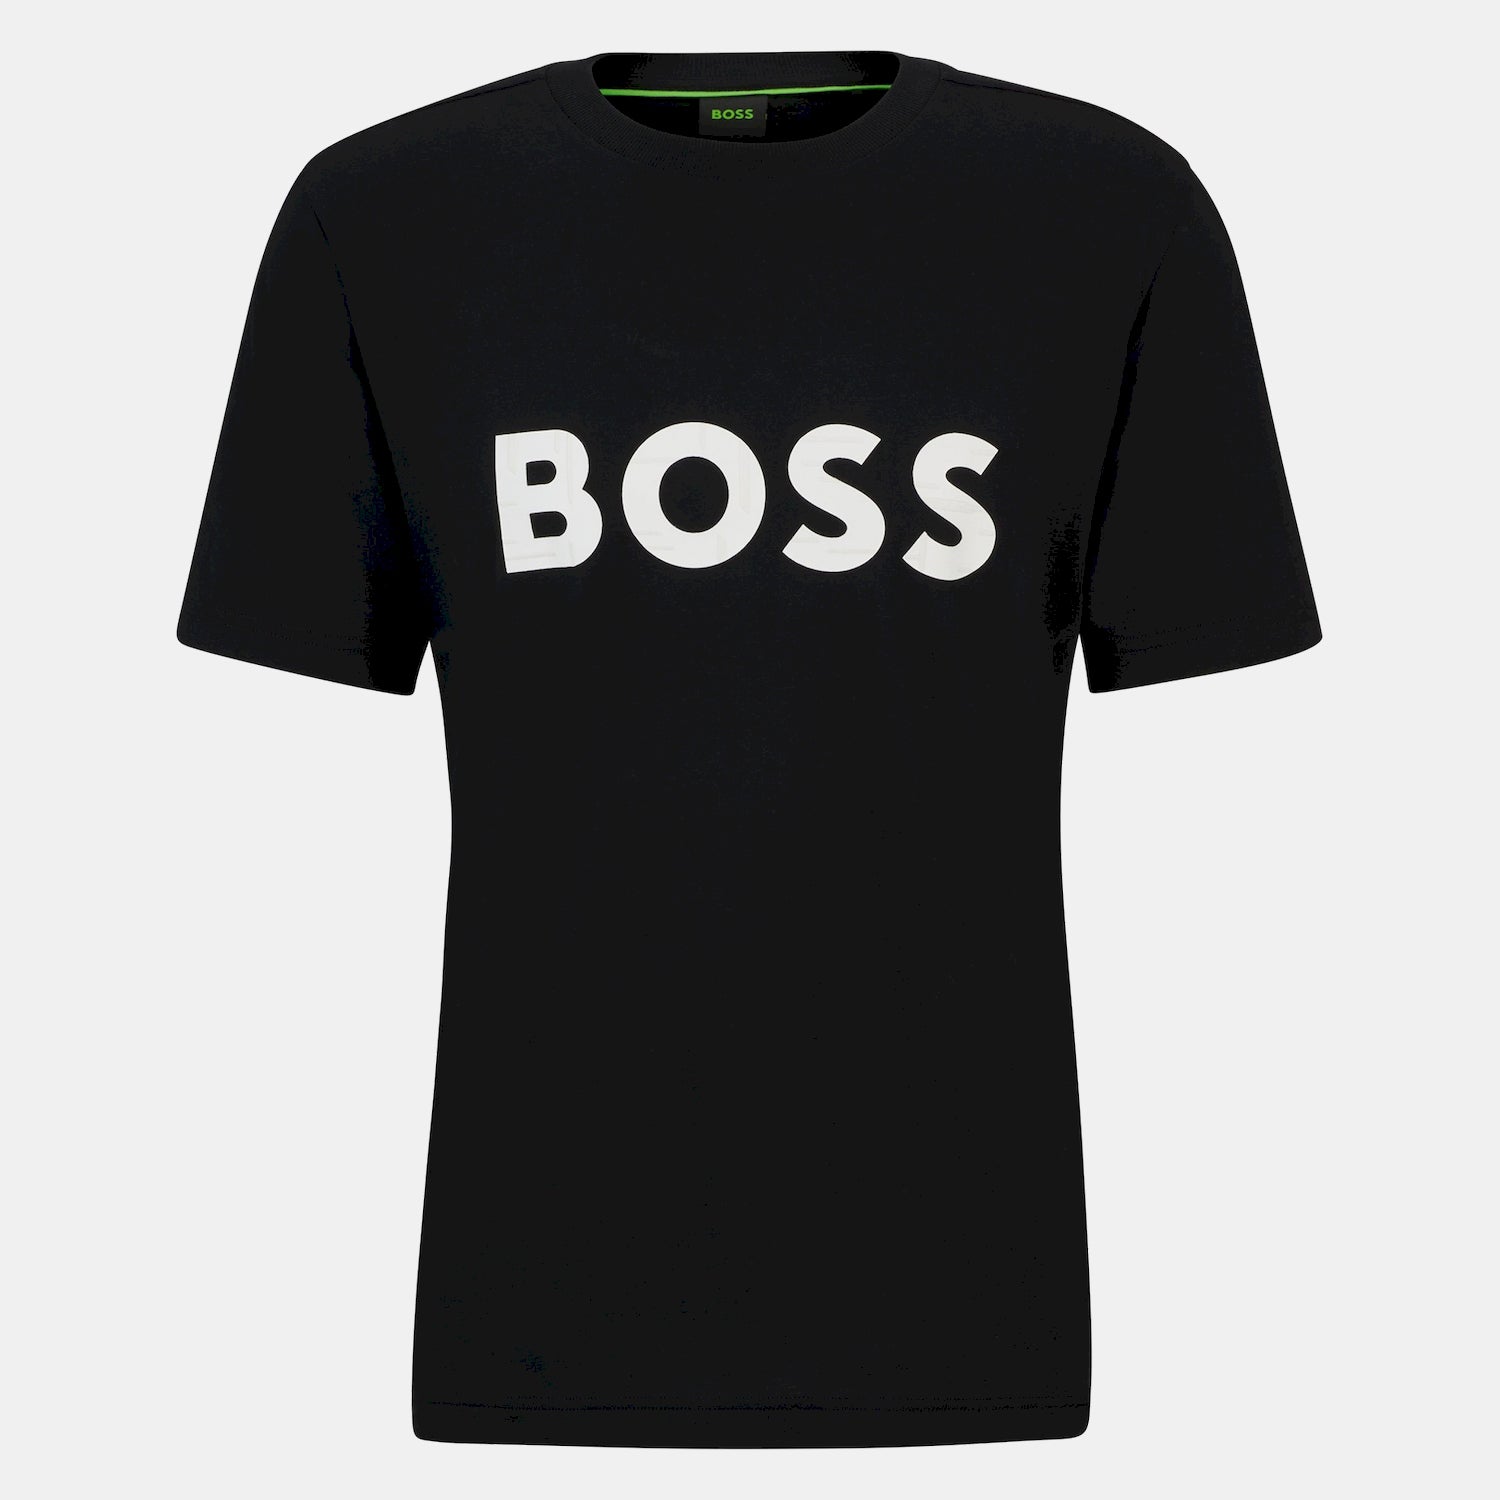 Boss T Shirt Tee 1 Black Preto_shot1